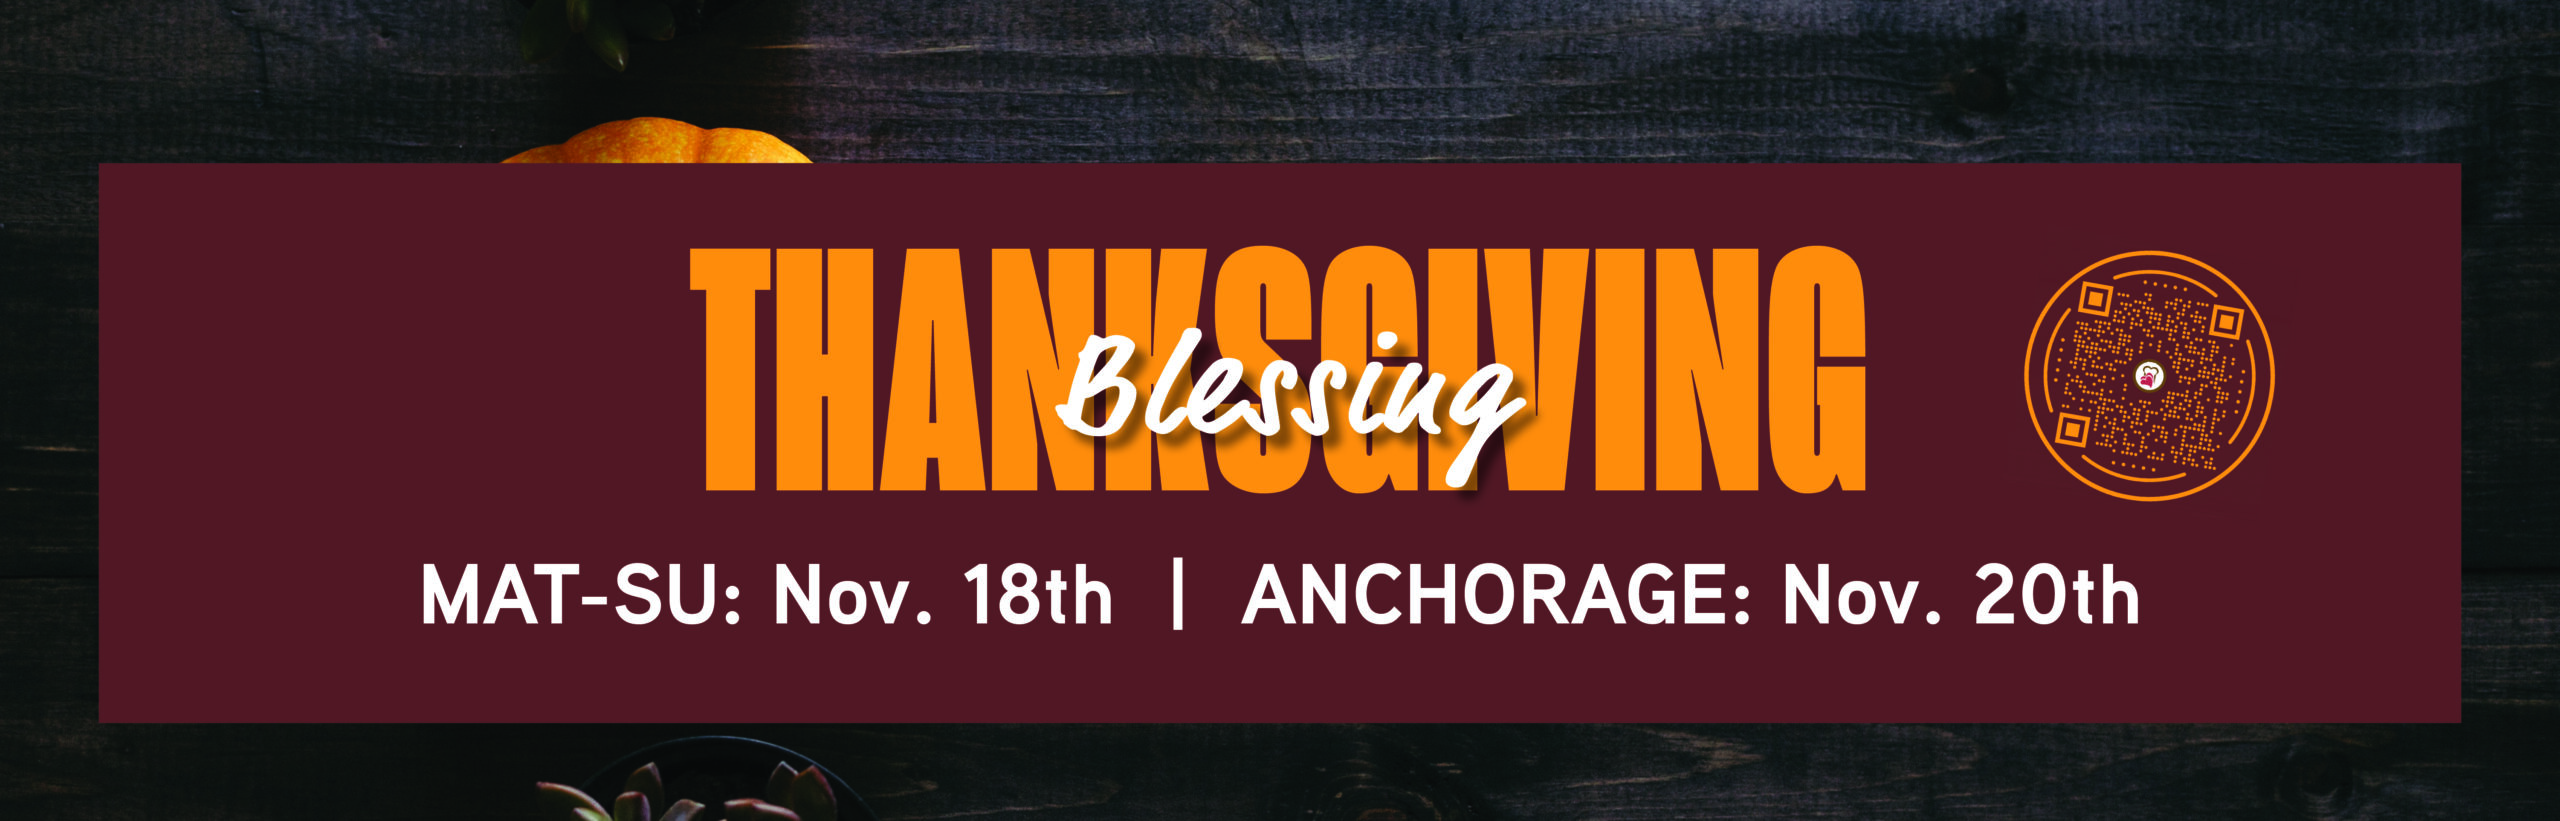 Thanksgiving Blessing - Food Bank of Alaska